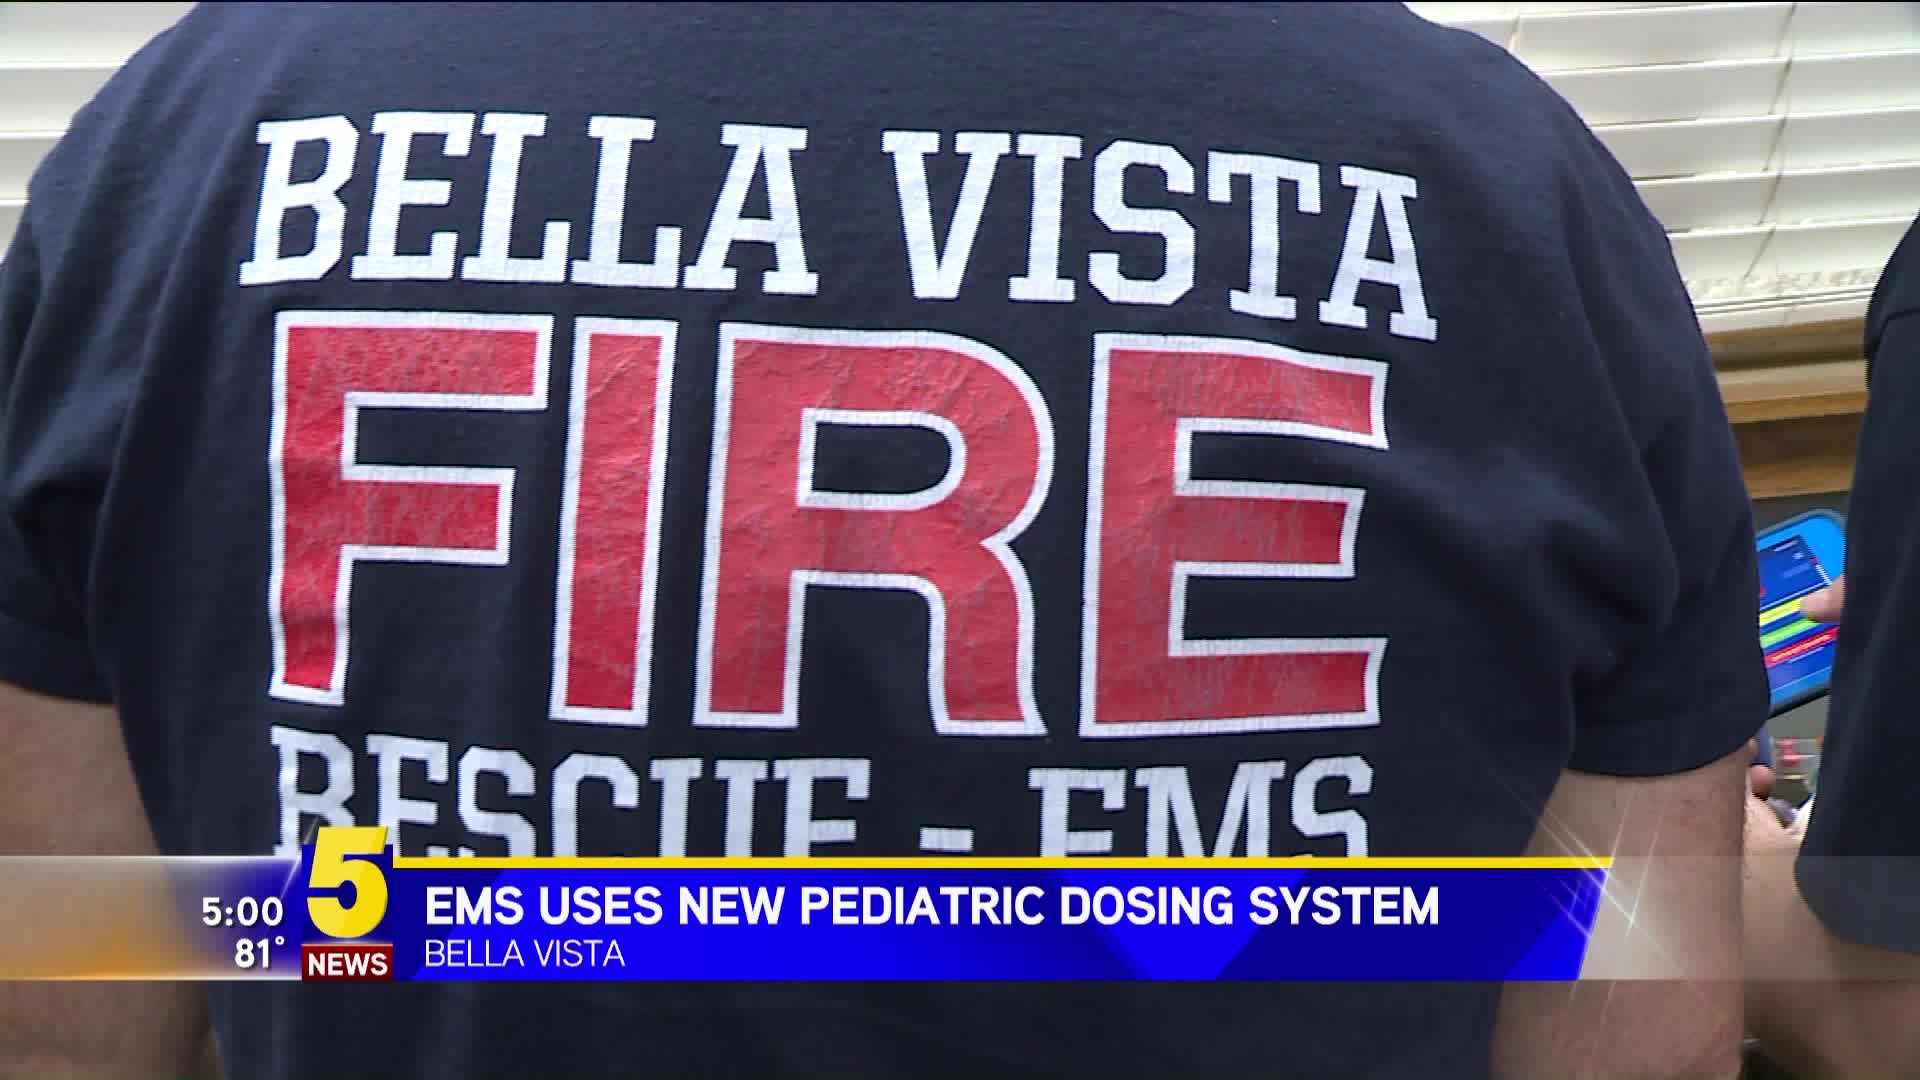 BELLA VISTA EMS USES NEW PEDIATRIC DOSING SYSTEM